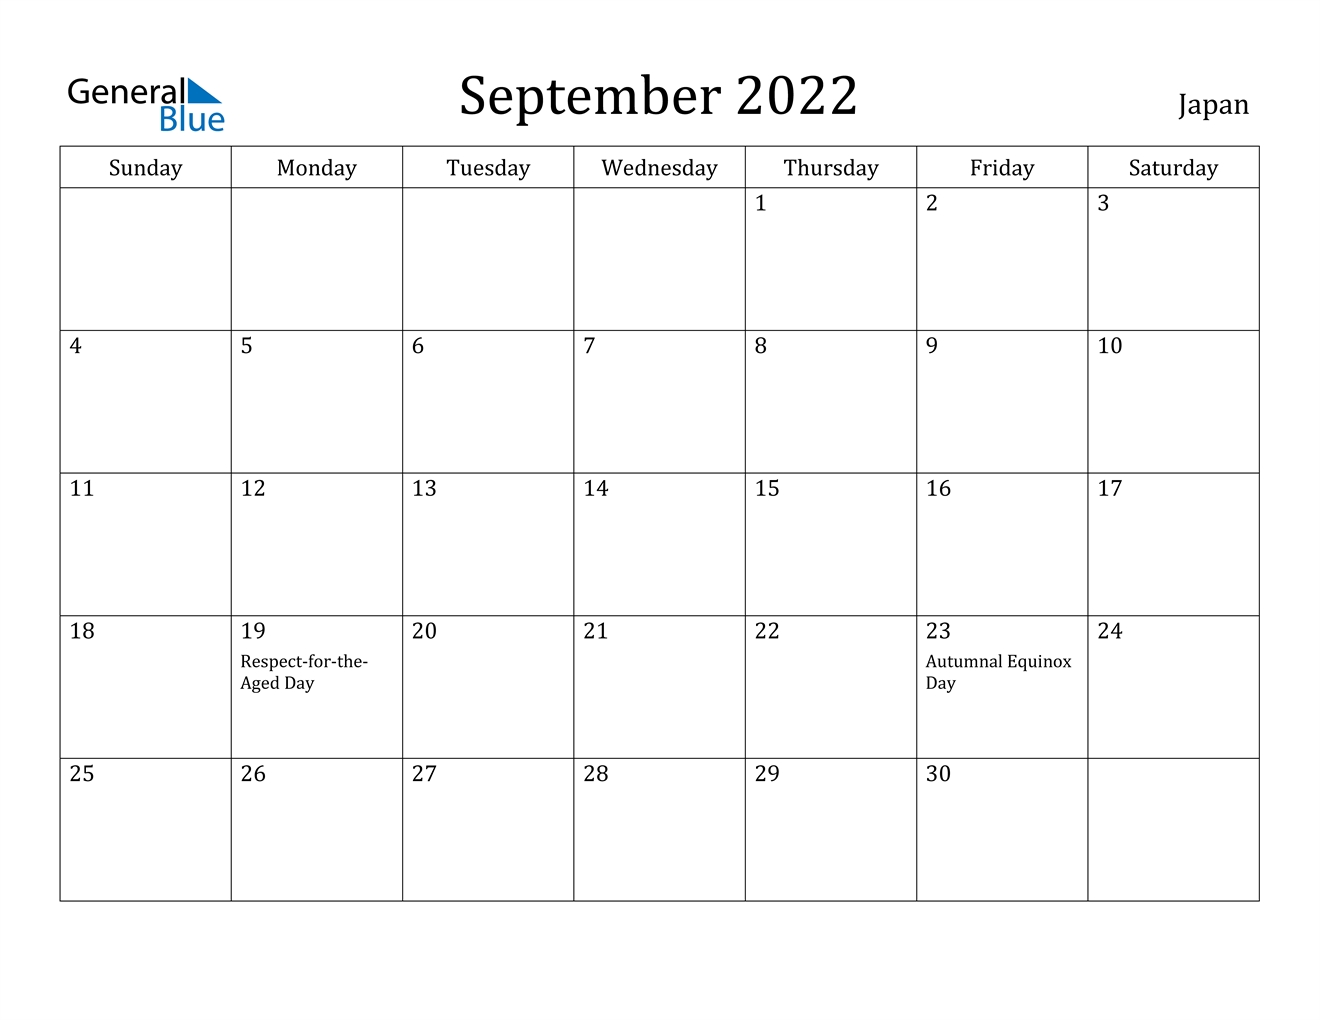 September 2022 Calendar - Japan